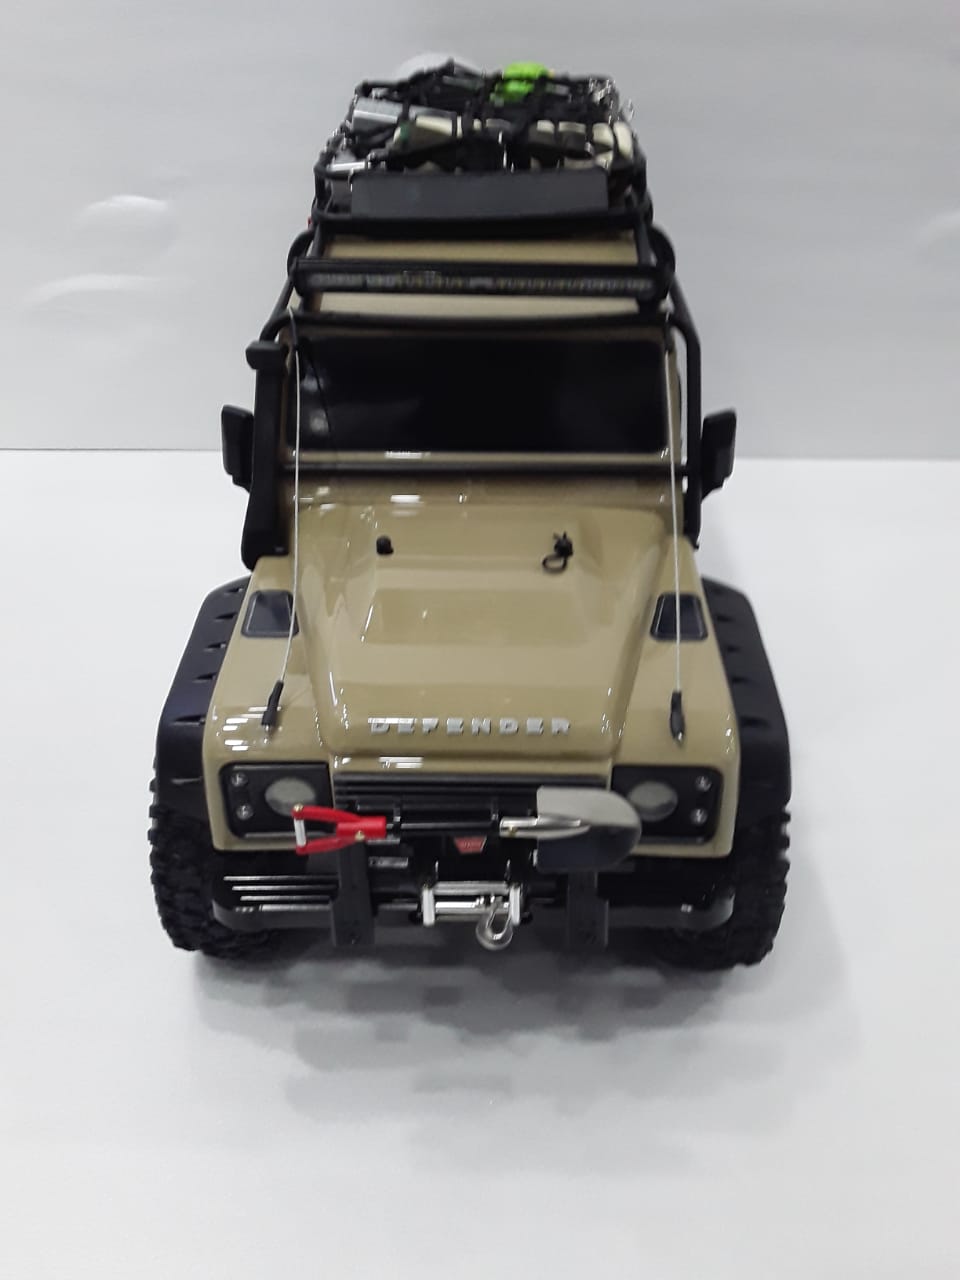 Traxxas Trx-4 Crawler Land Rover Defender Modified Model 82056-4 Sand